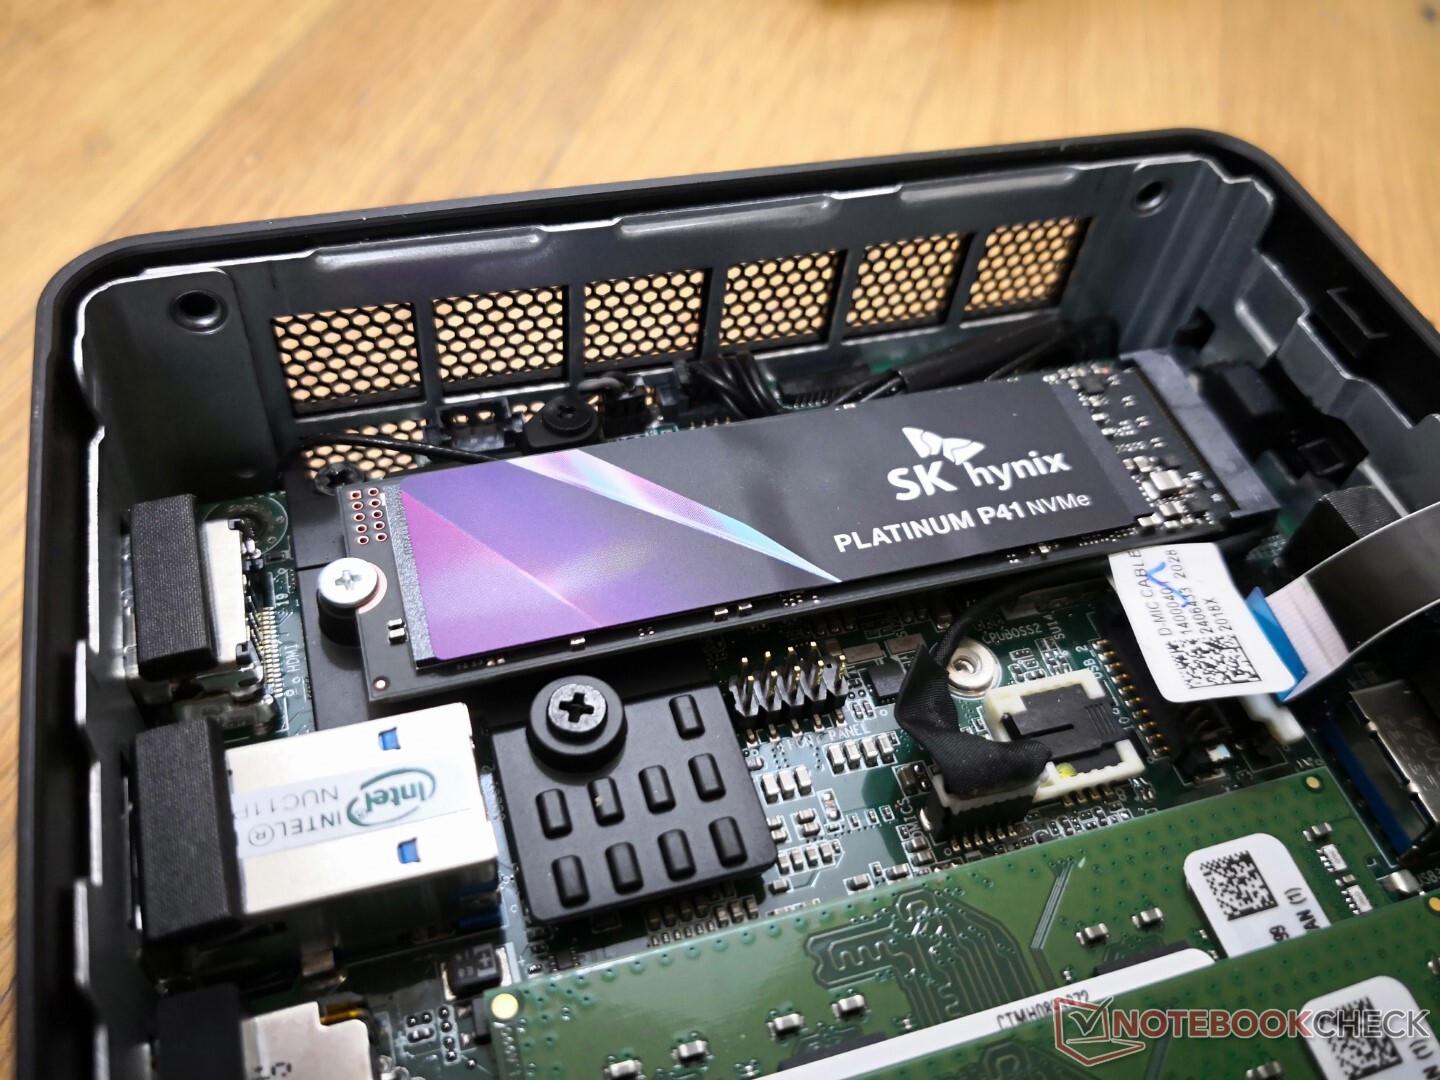 Sk hynix Platinum P41 2 TB PCIe4 x4 NVMe SSD benchmarked